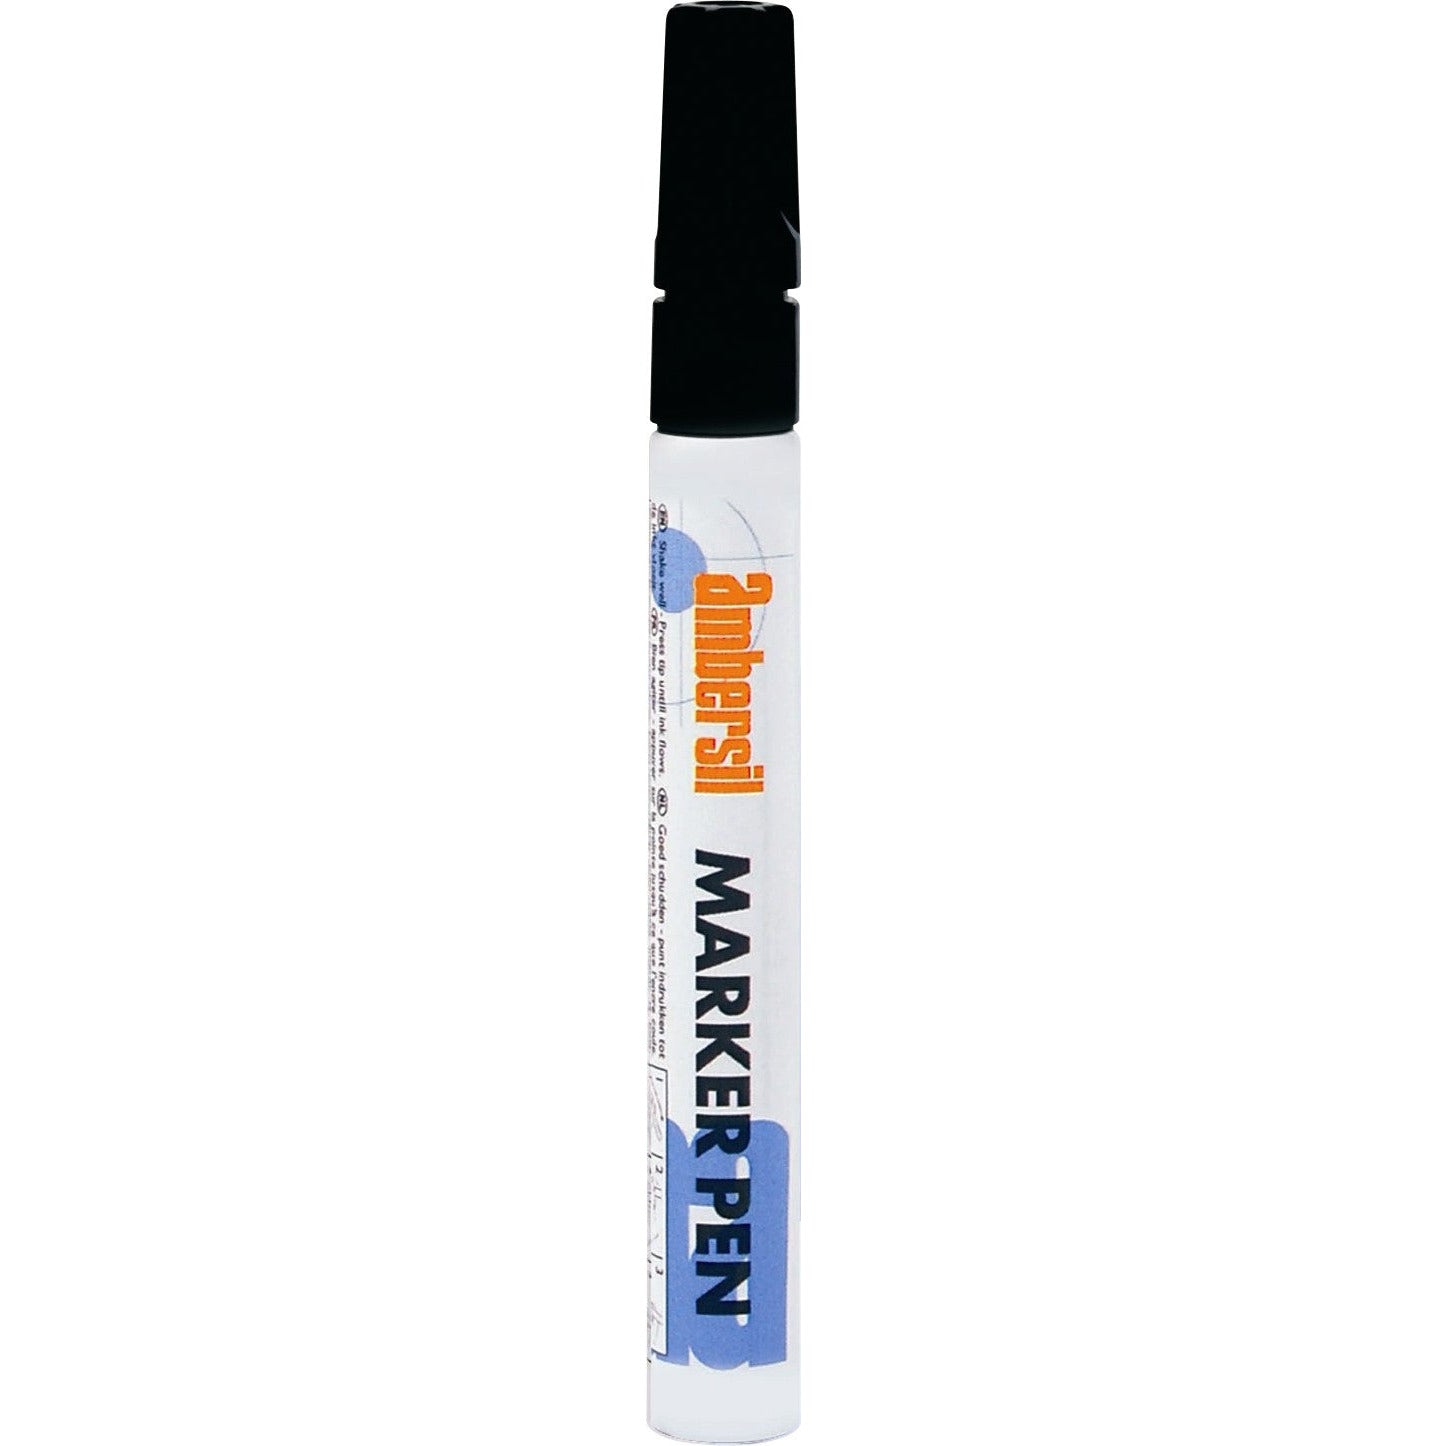 Ambersil Acrylic Paint Marker Pens 3mm nib. Pack of 10